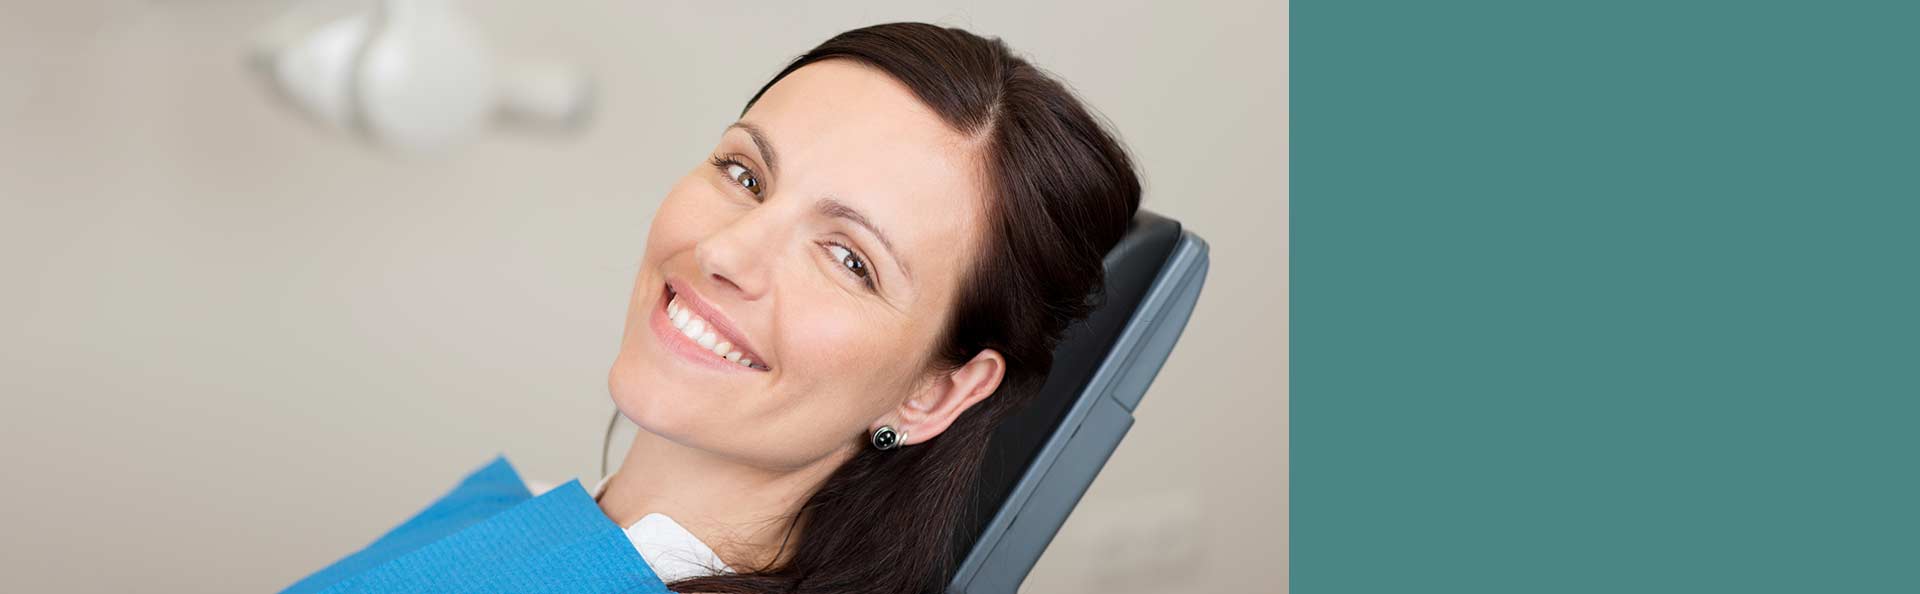 Corinthia Dental Clinic | Leduc Dentist | Dental Hygiene Appointments